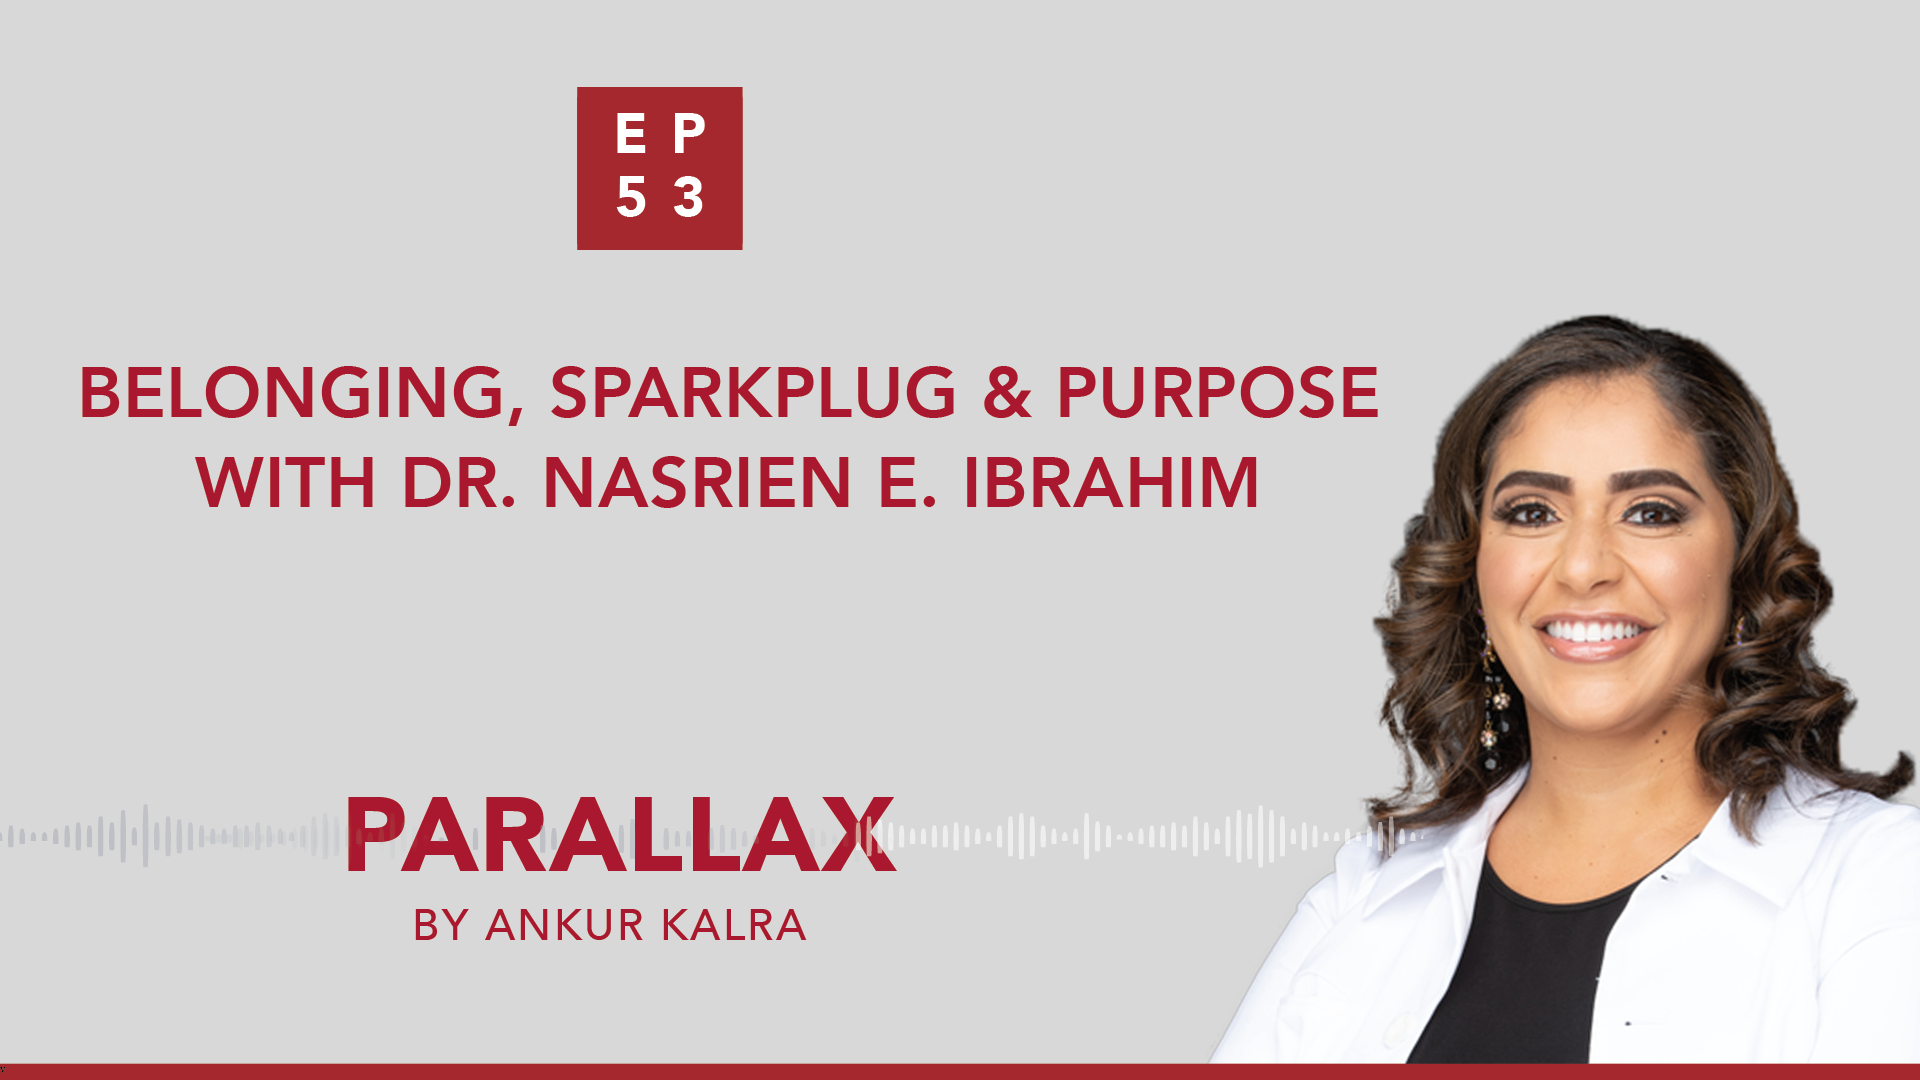 EP 53: Belonging, Sparkplug & Purpose with Dr. Nasrien E. Ibrahim